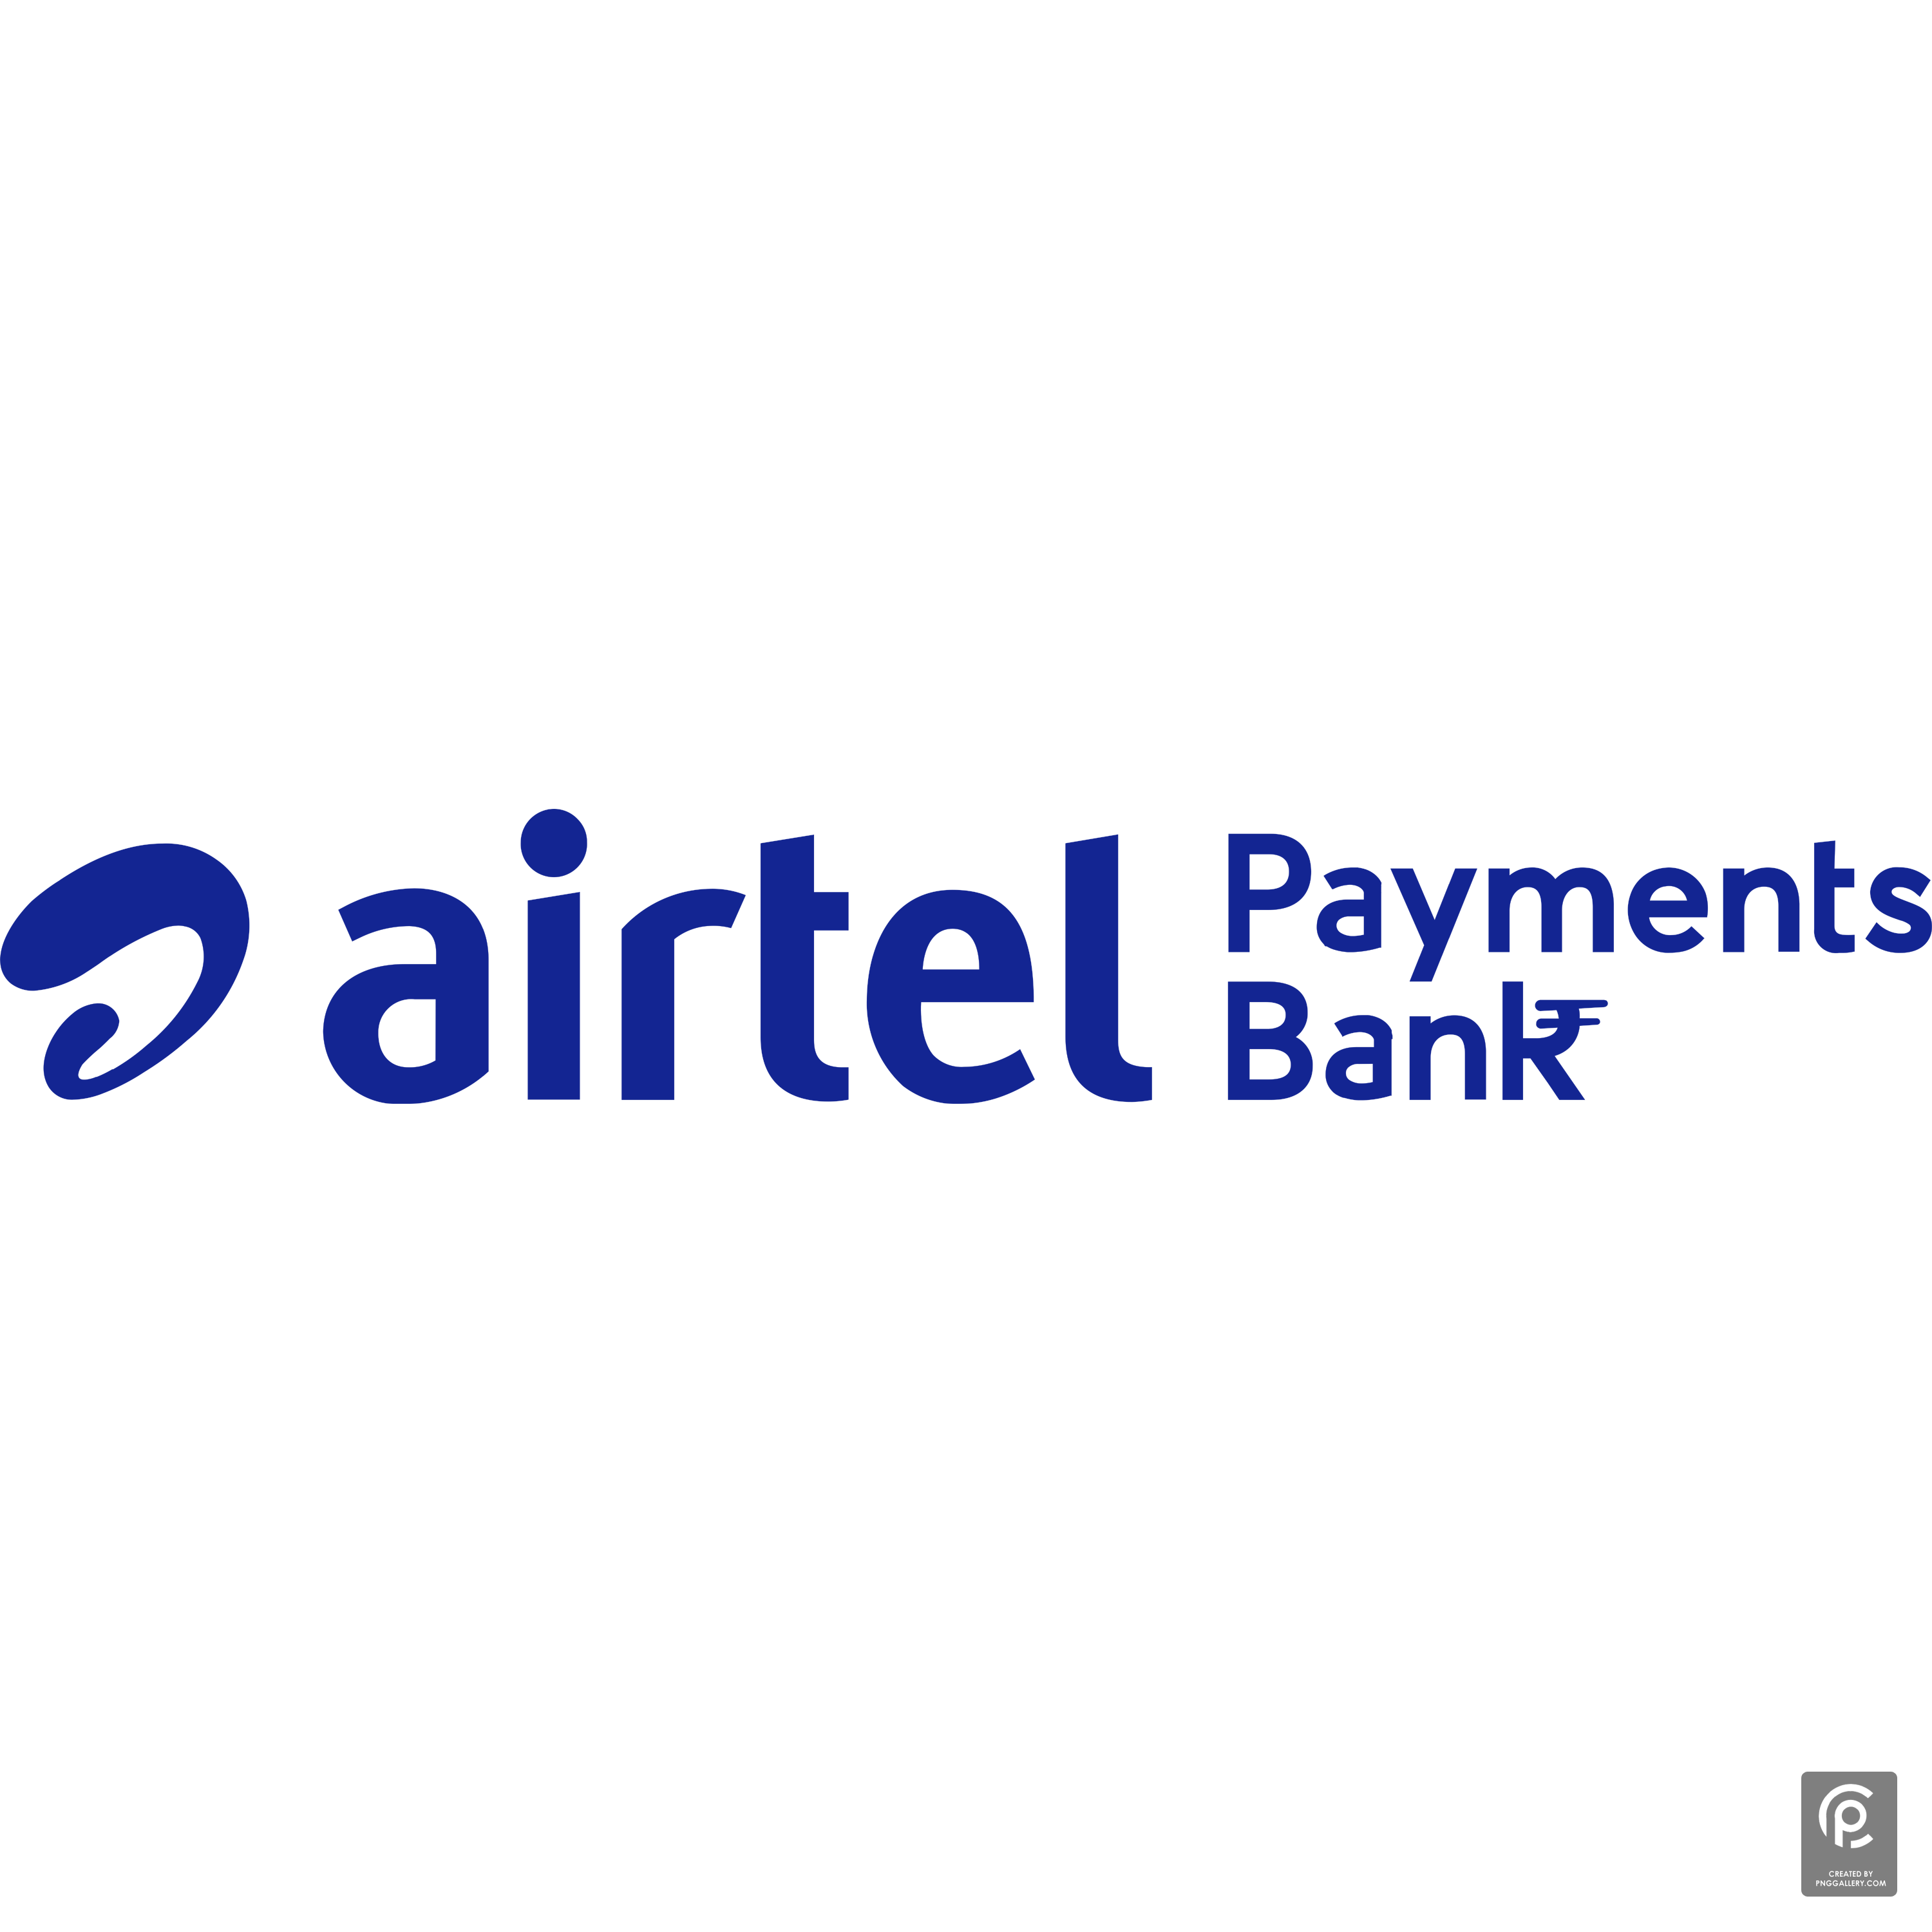 Airtel Payments Bank Logo Transparent Picture